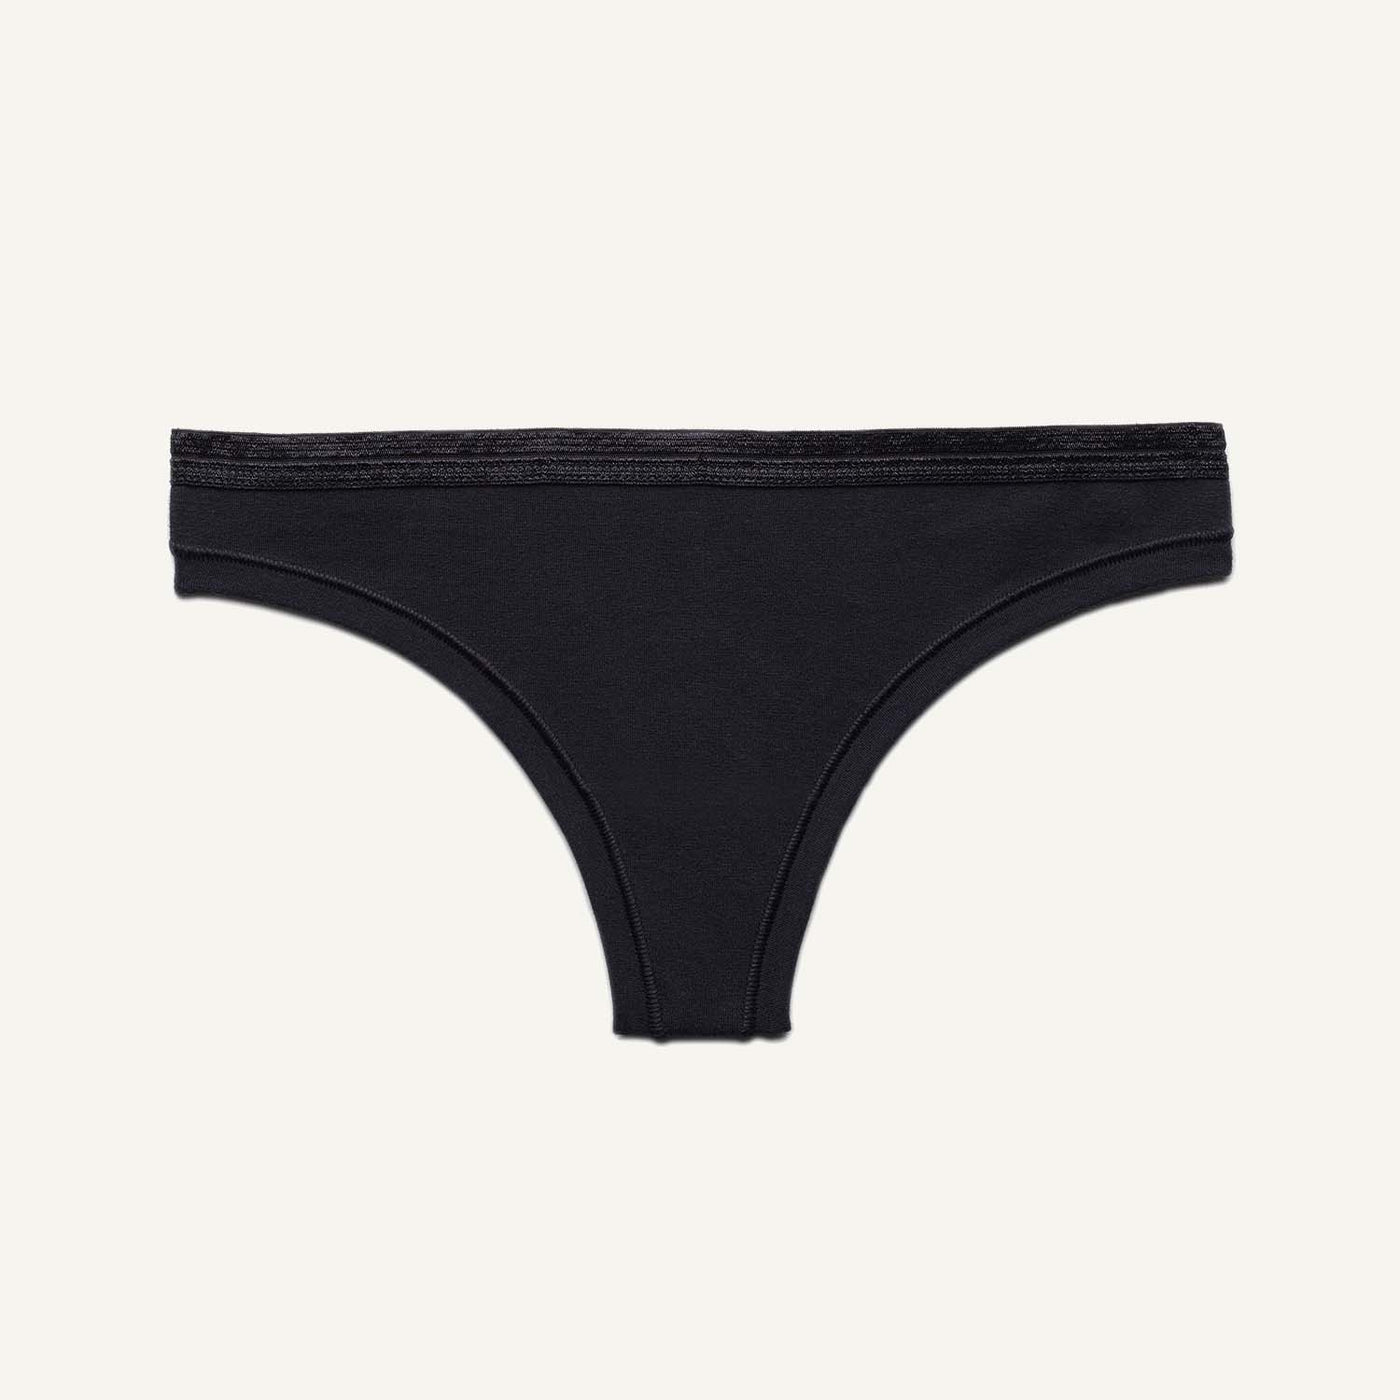 Tiny Panties Briefs Cotton Low Waist Seamless Sexy Women Thong